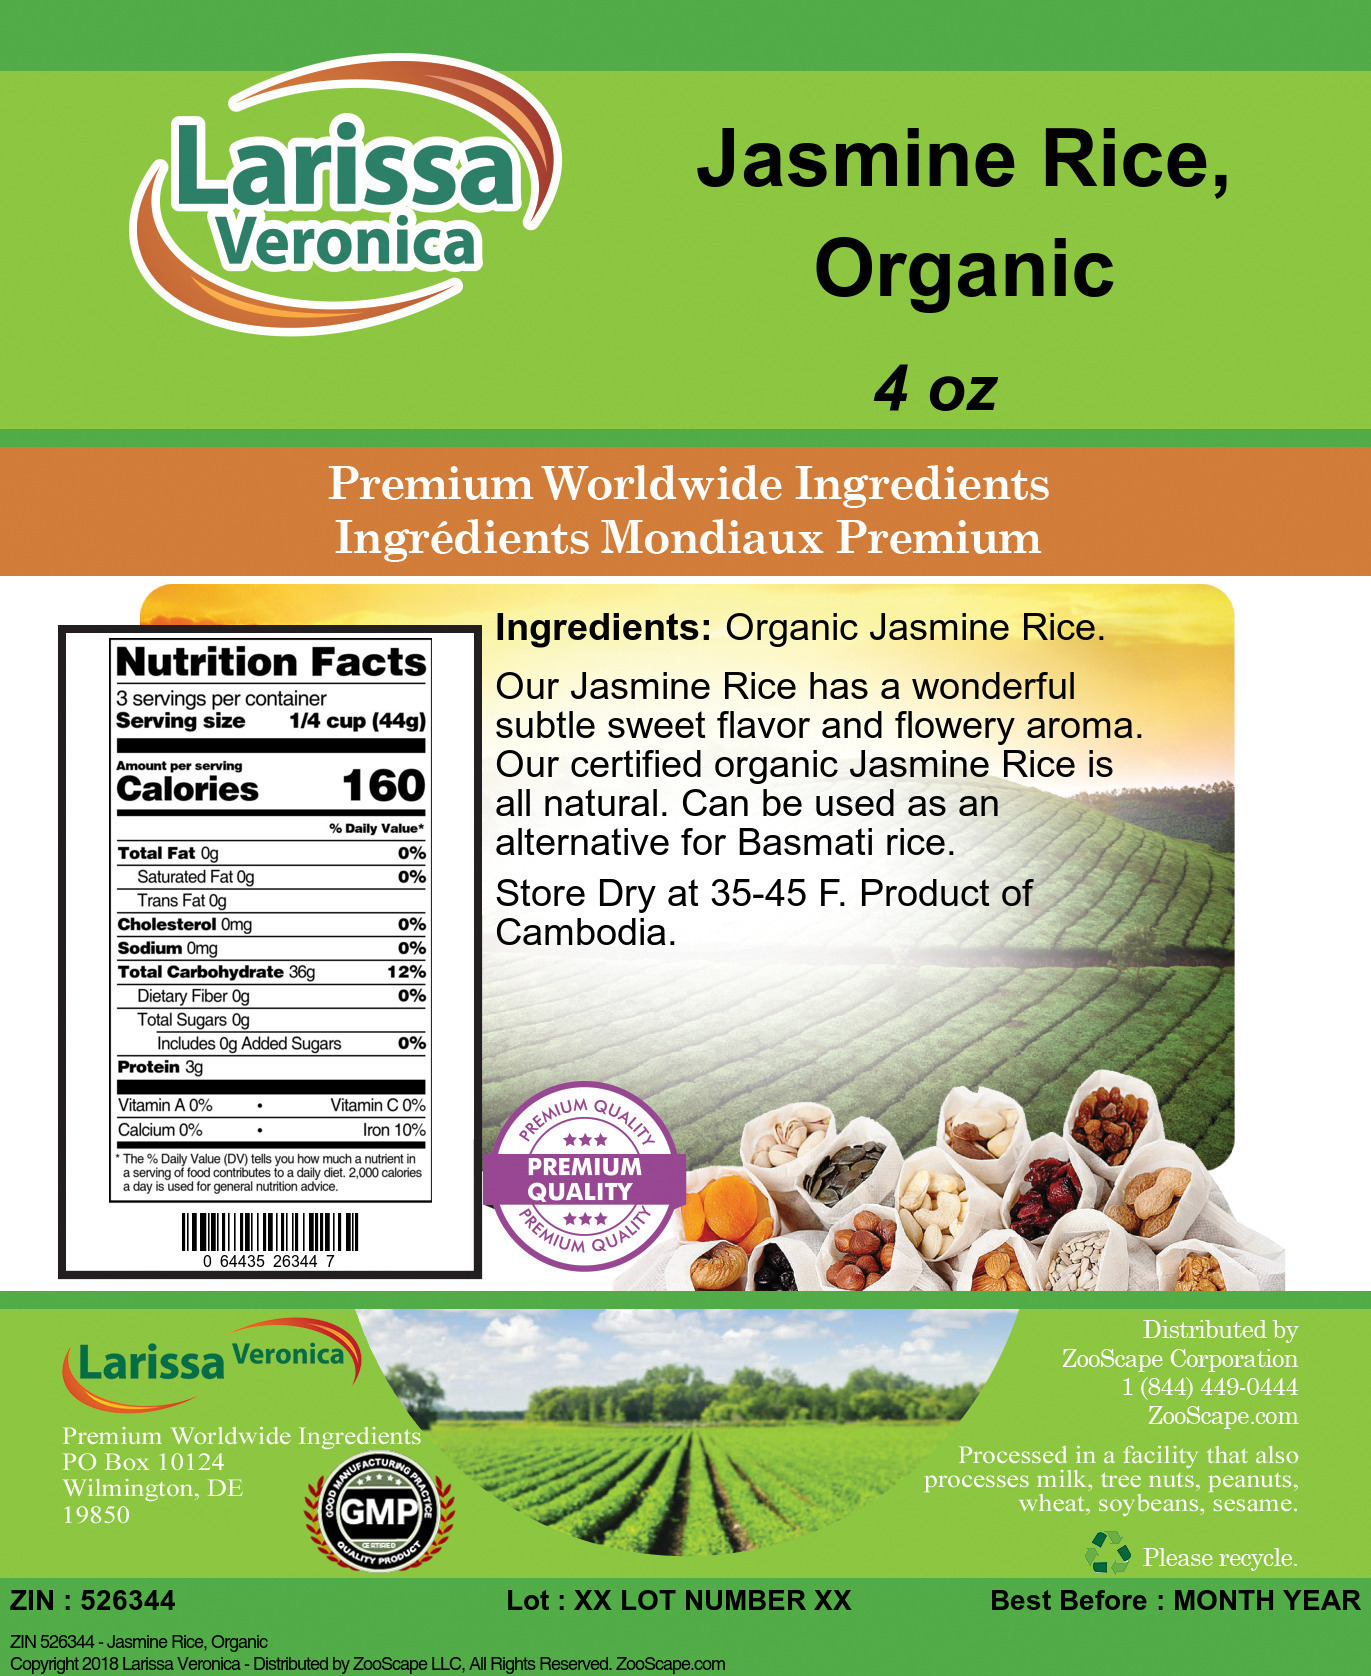 Jasmine Rice, Organic - Label